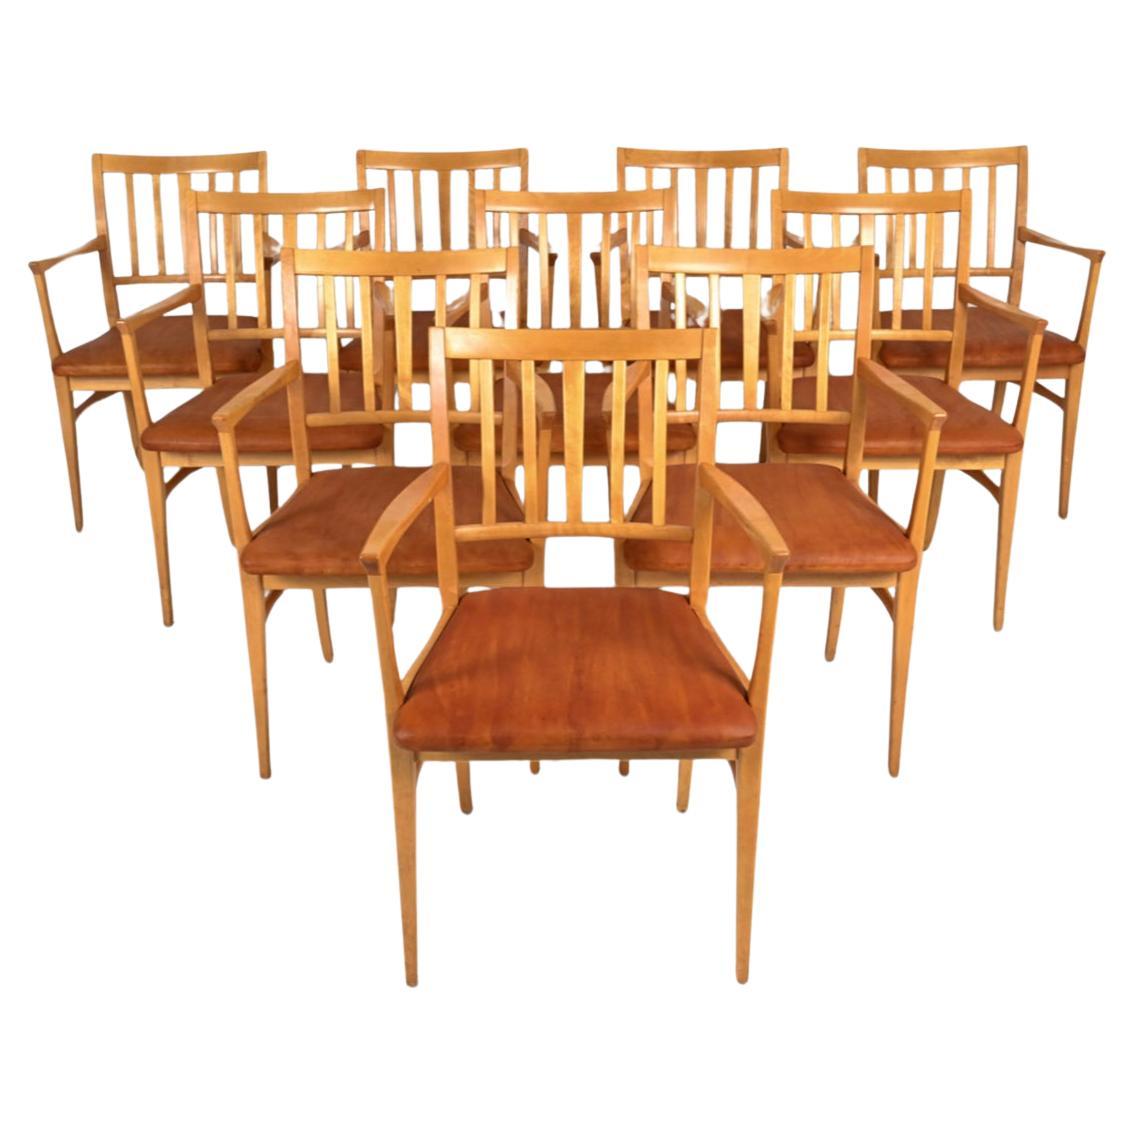 10 Swedish Mid Century Modern slat back dining chairs designed by Carl Malmsten